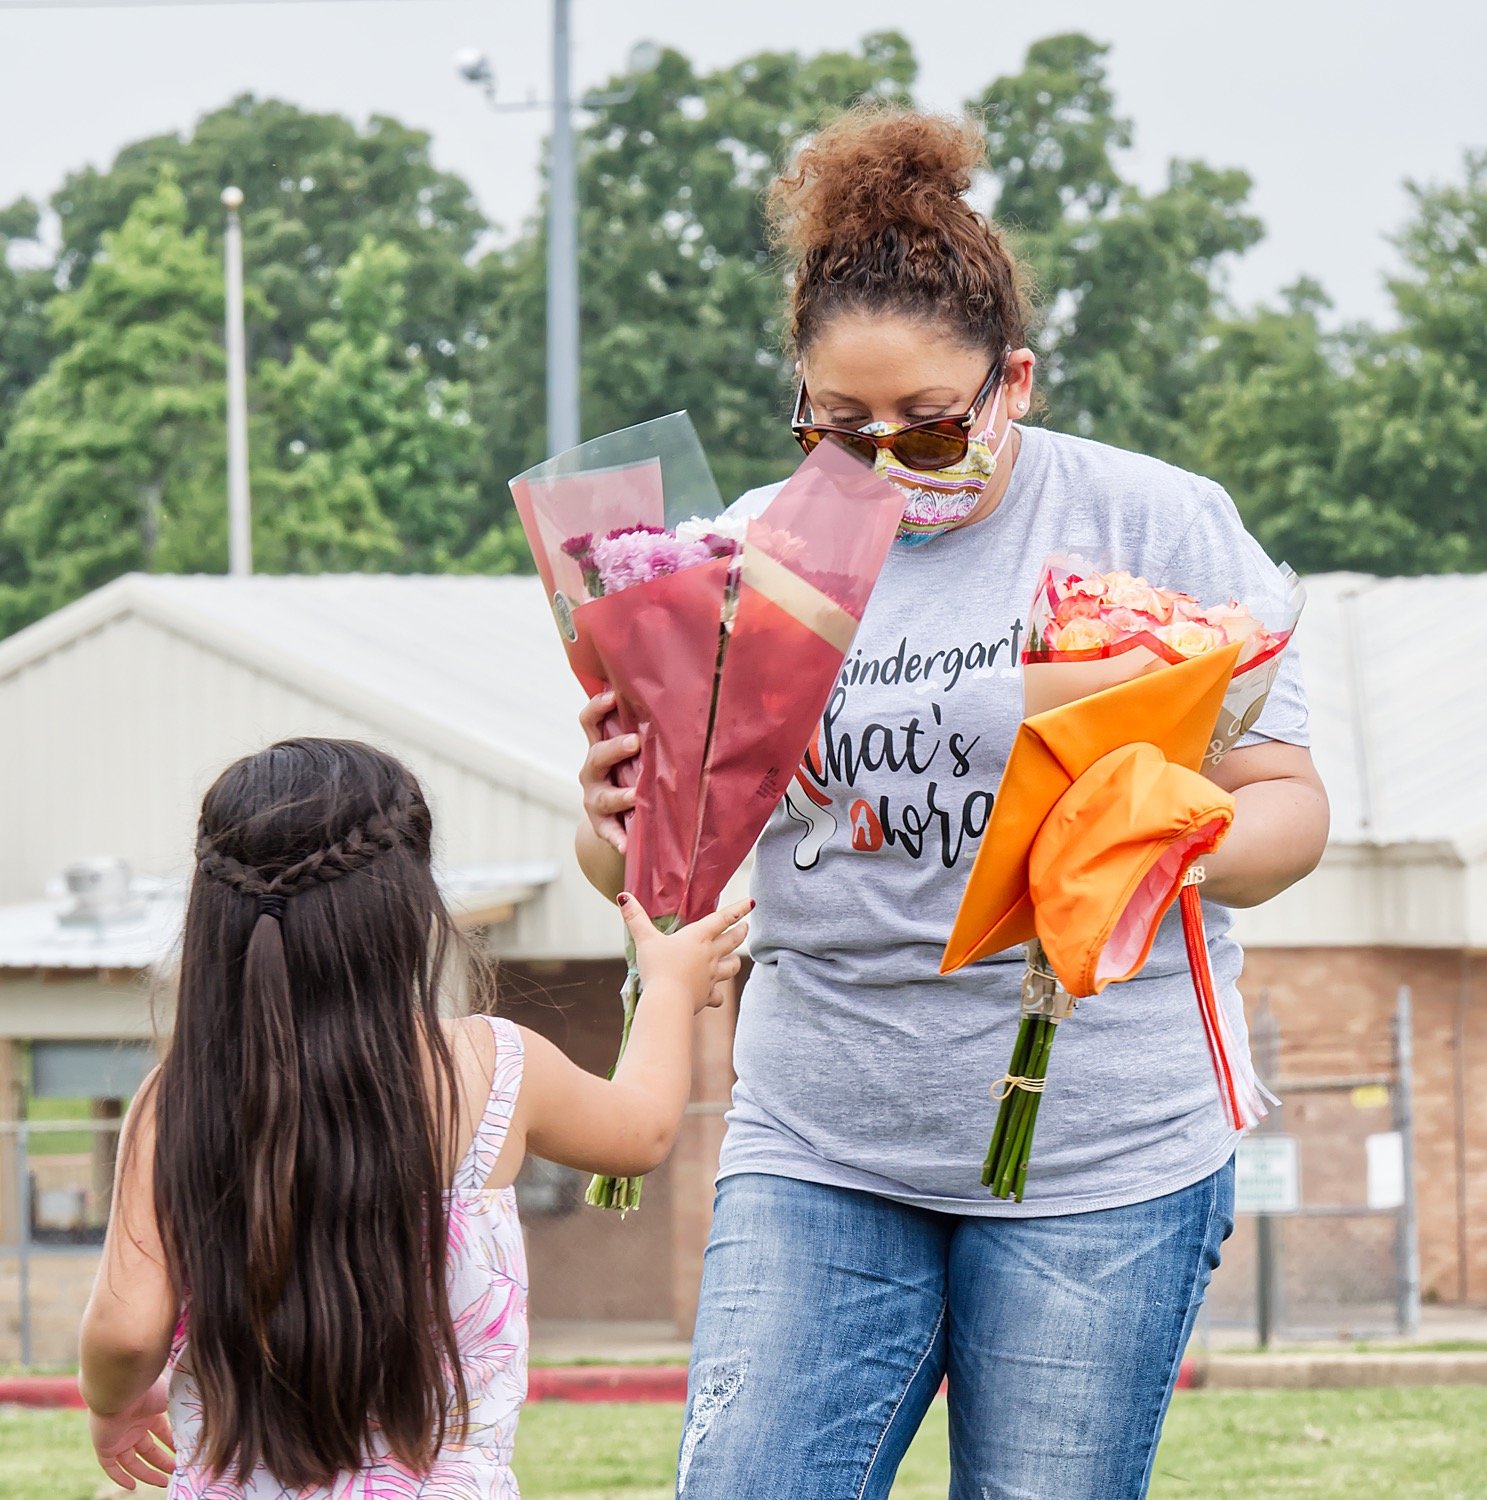 Mineola kindergarten teacher Raquel Palma gets flowers from Diana Galaz Valenzuela at last week’s drive through graduation.